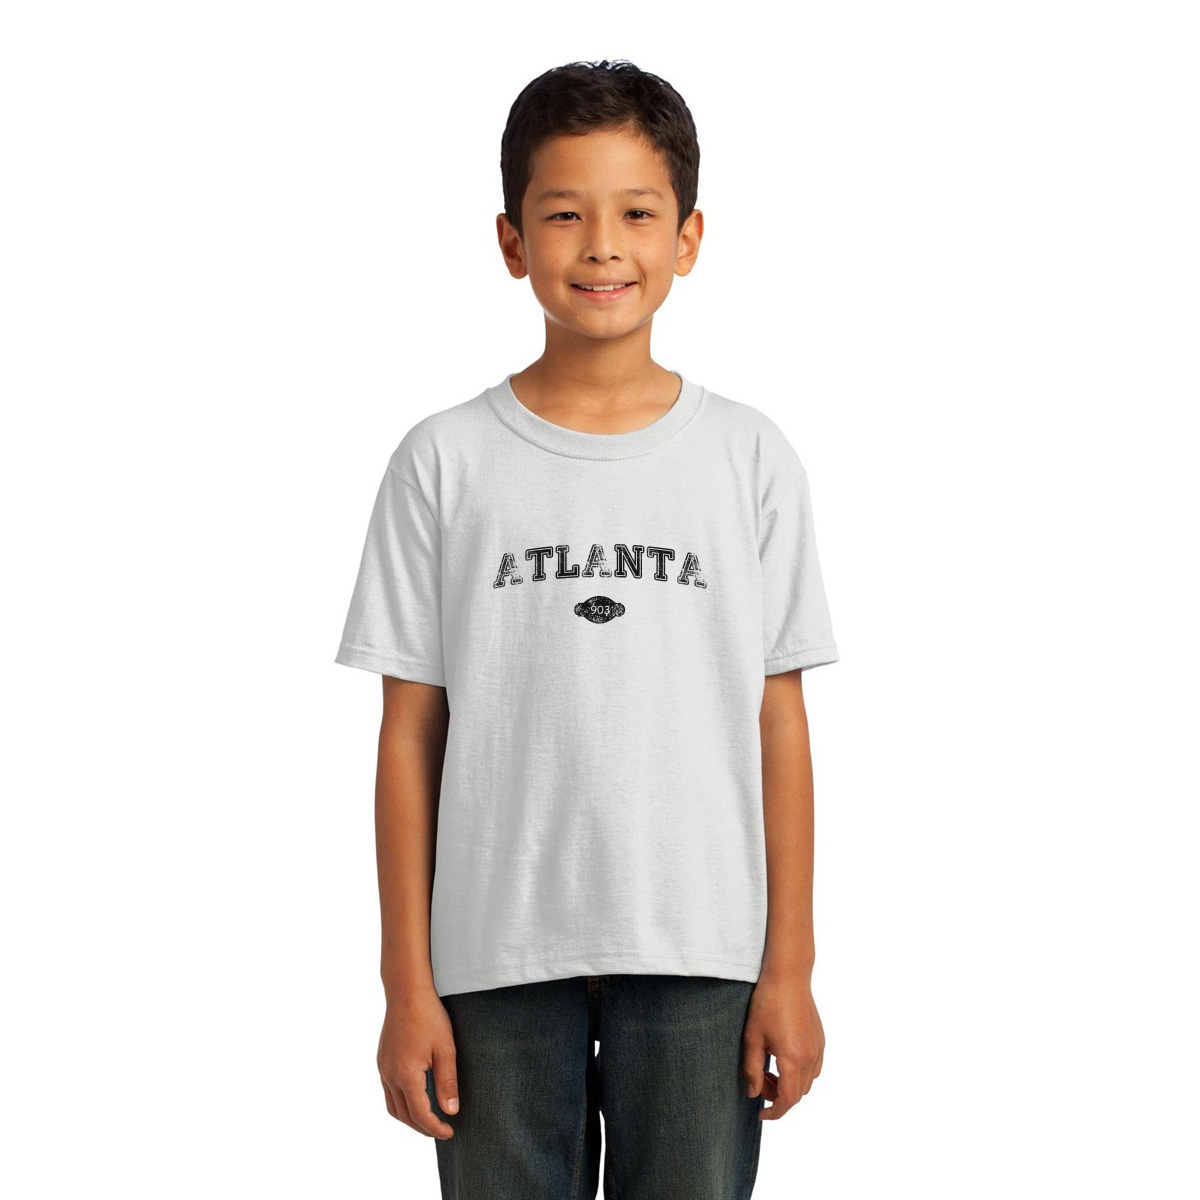 Atlanta 903 Represent Toddler T-shirt | White